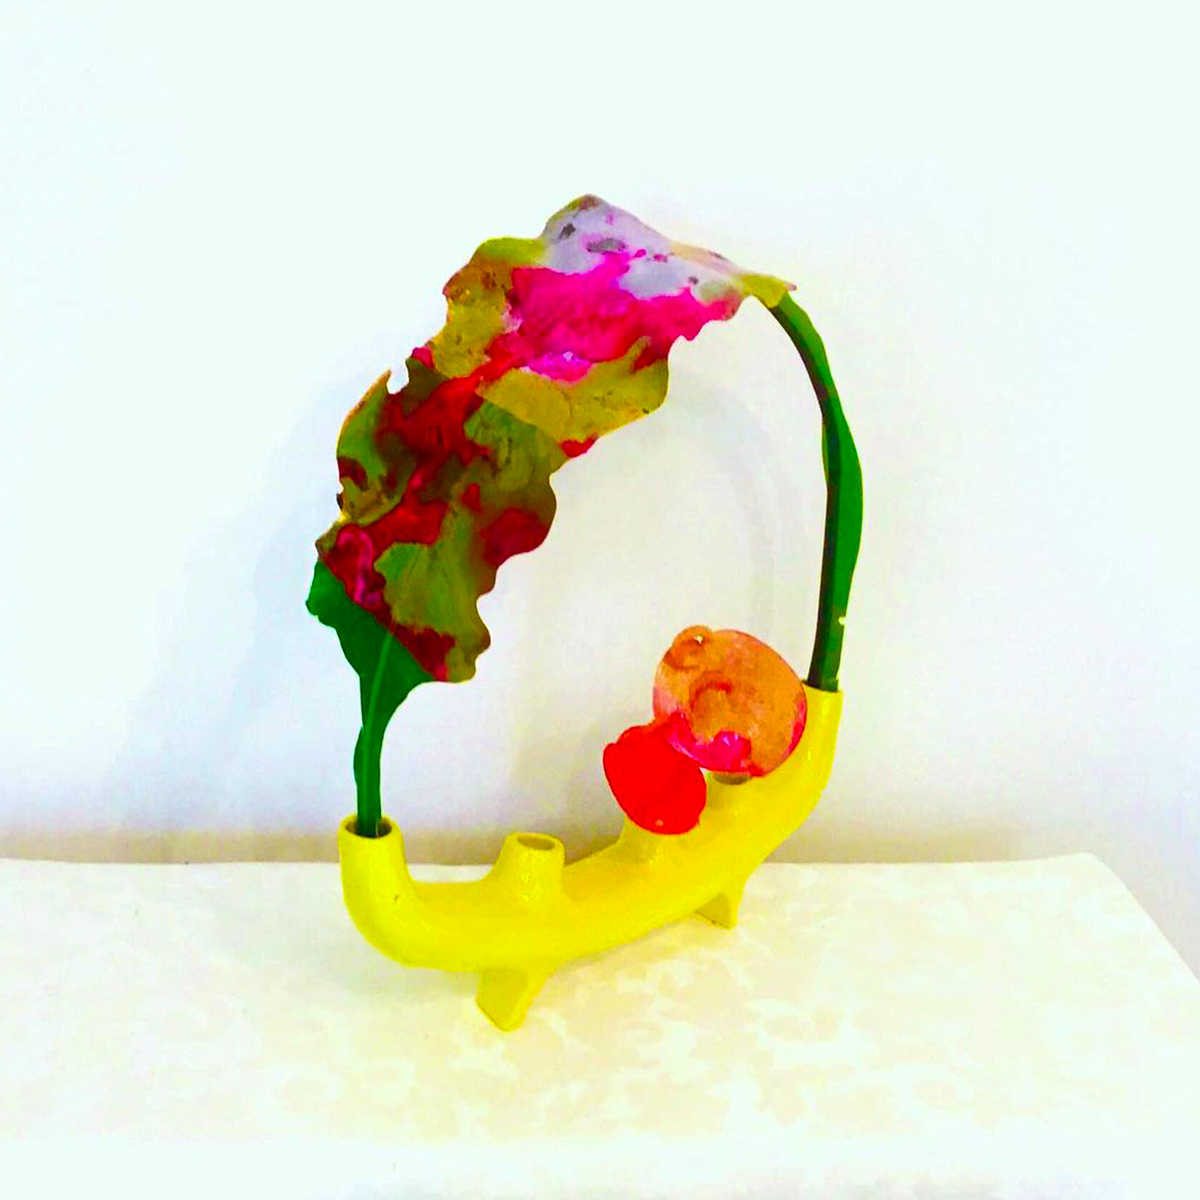 Toula Karanikolopoulos Shows How Ikebana Is the Art of Flower Arrangement 07